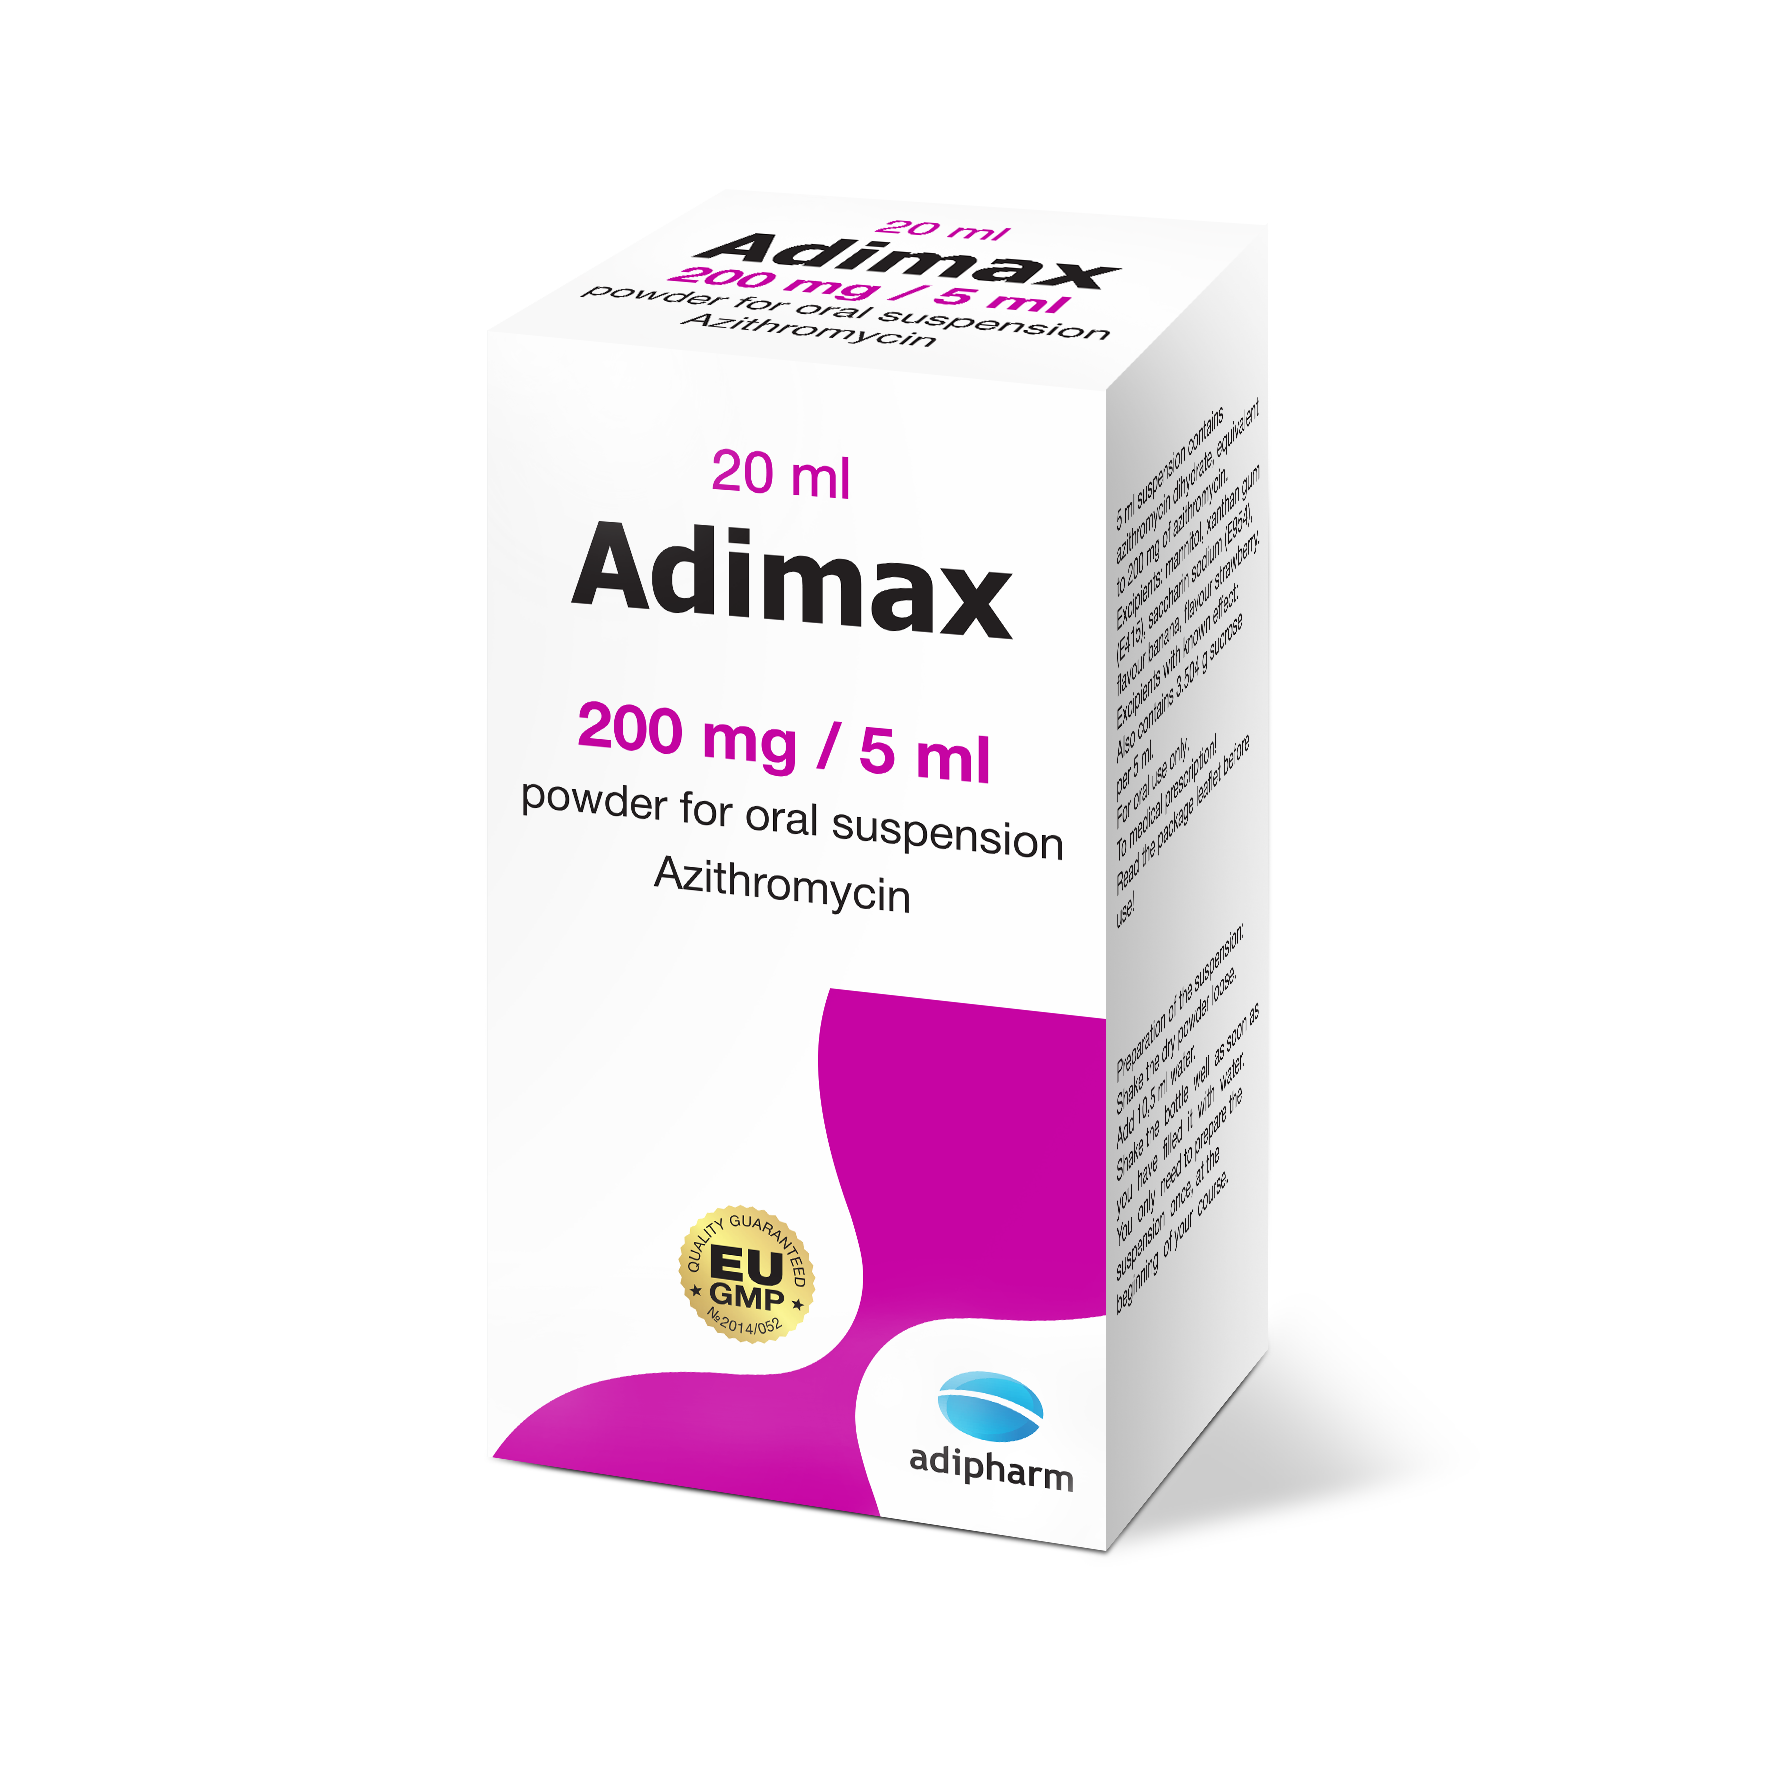 Adipharm Ltd. - Adimax 200 mg /5 ml - 20 ml